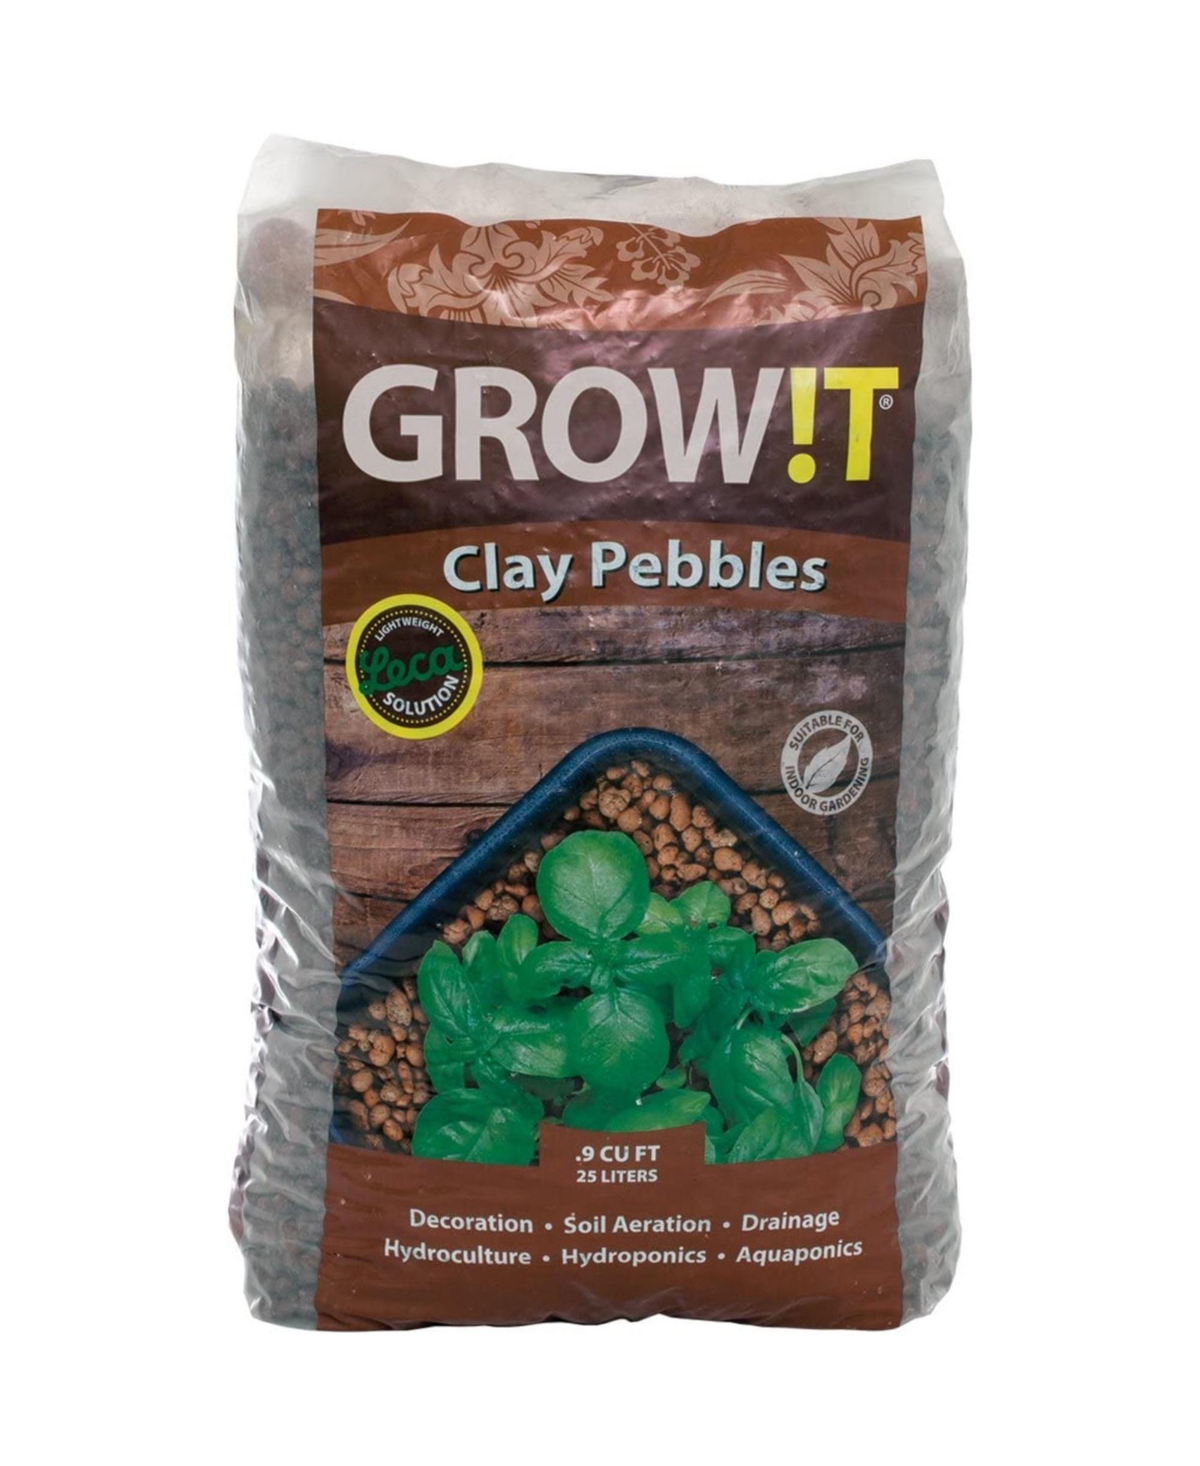 Growt GMC25L 25 Liter Bag, 4mm-16mm Clay Pebbles, Brown, 25 L Bag - Brown